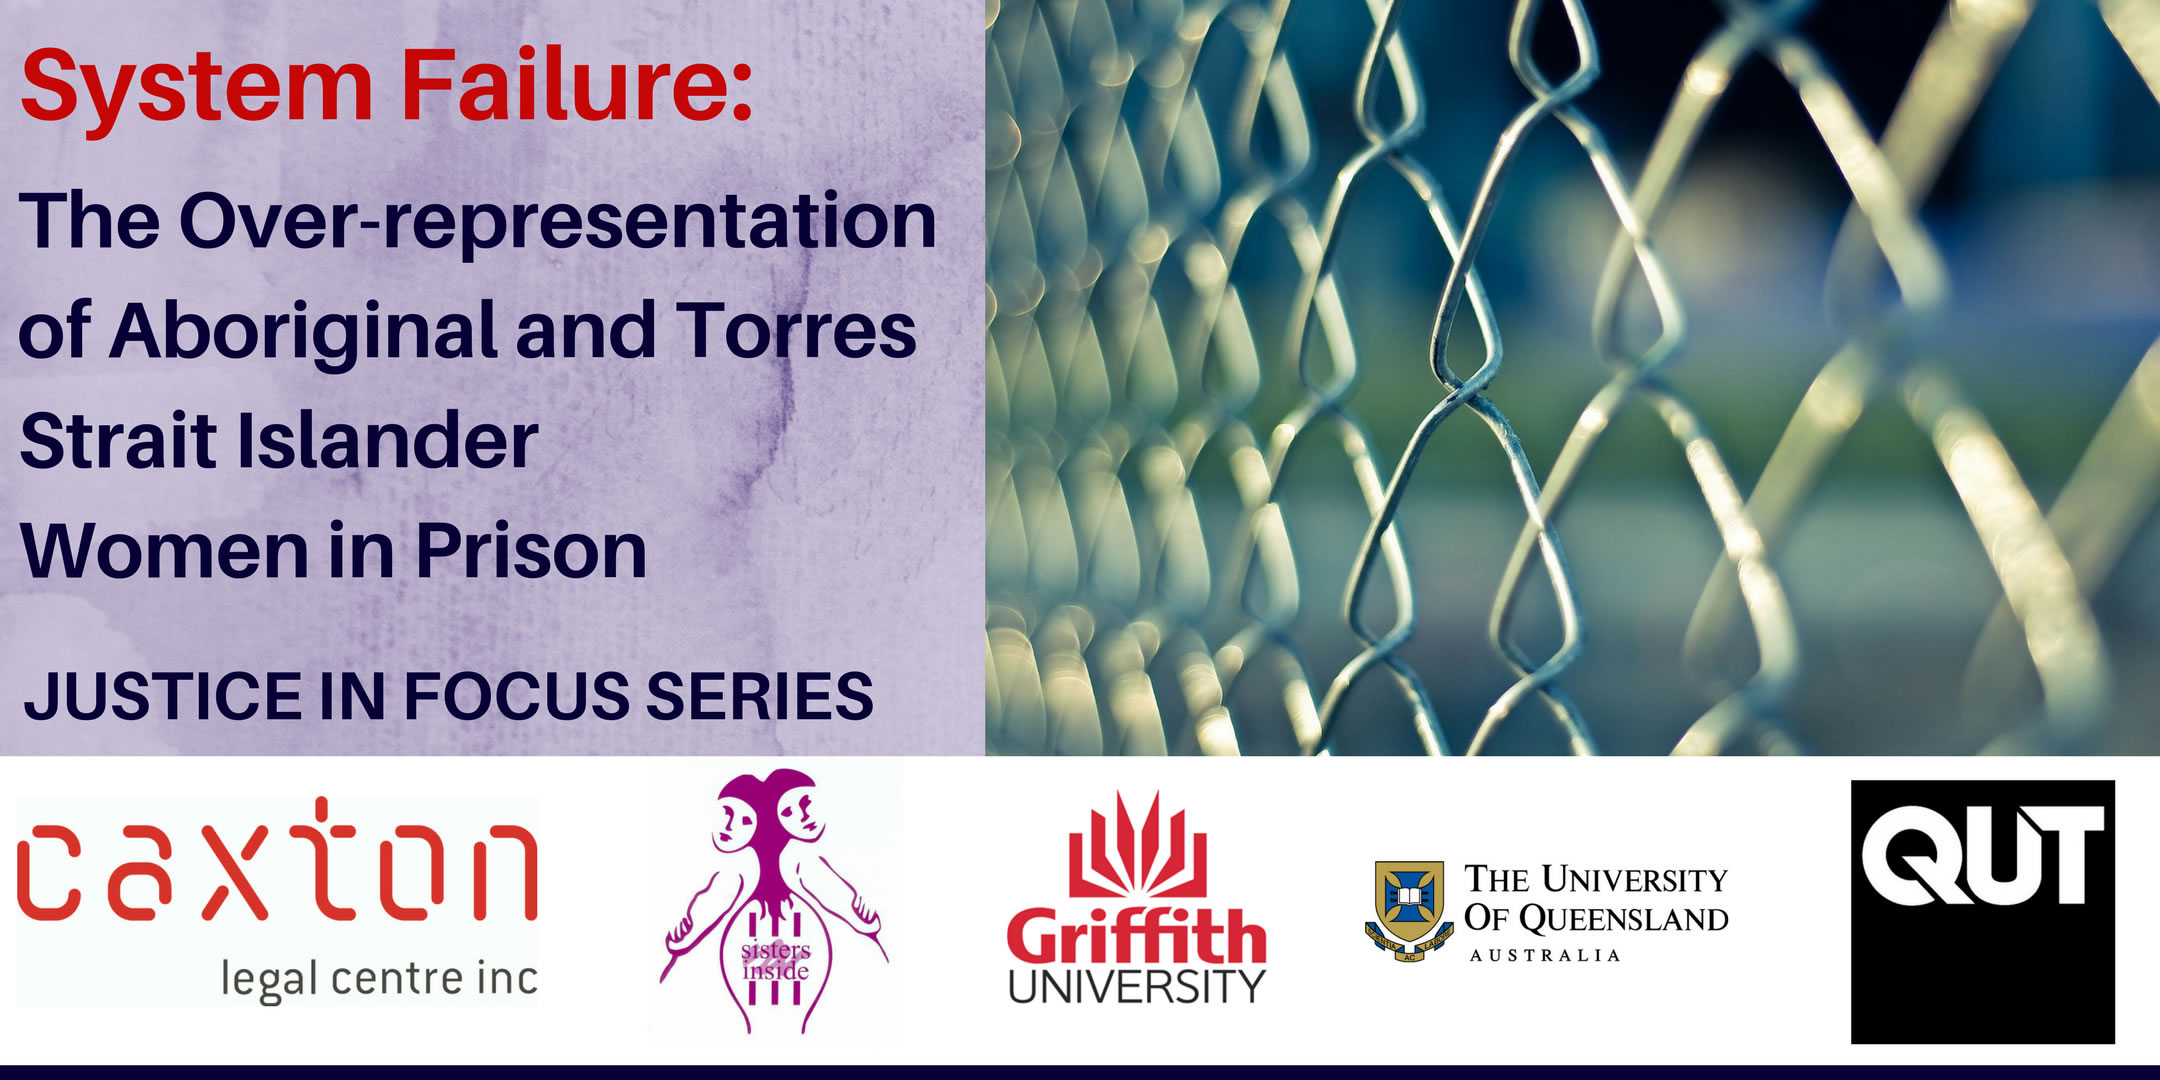 System Failure: The Over-representation of Aboriginal and Torres Strait Islander Women in Prison